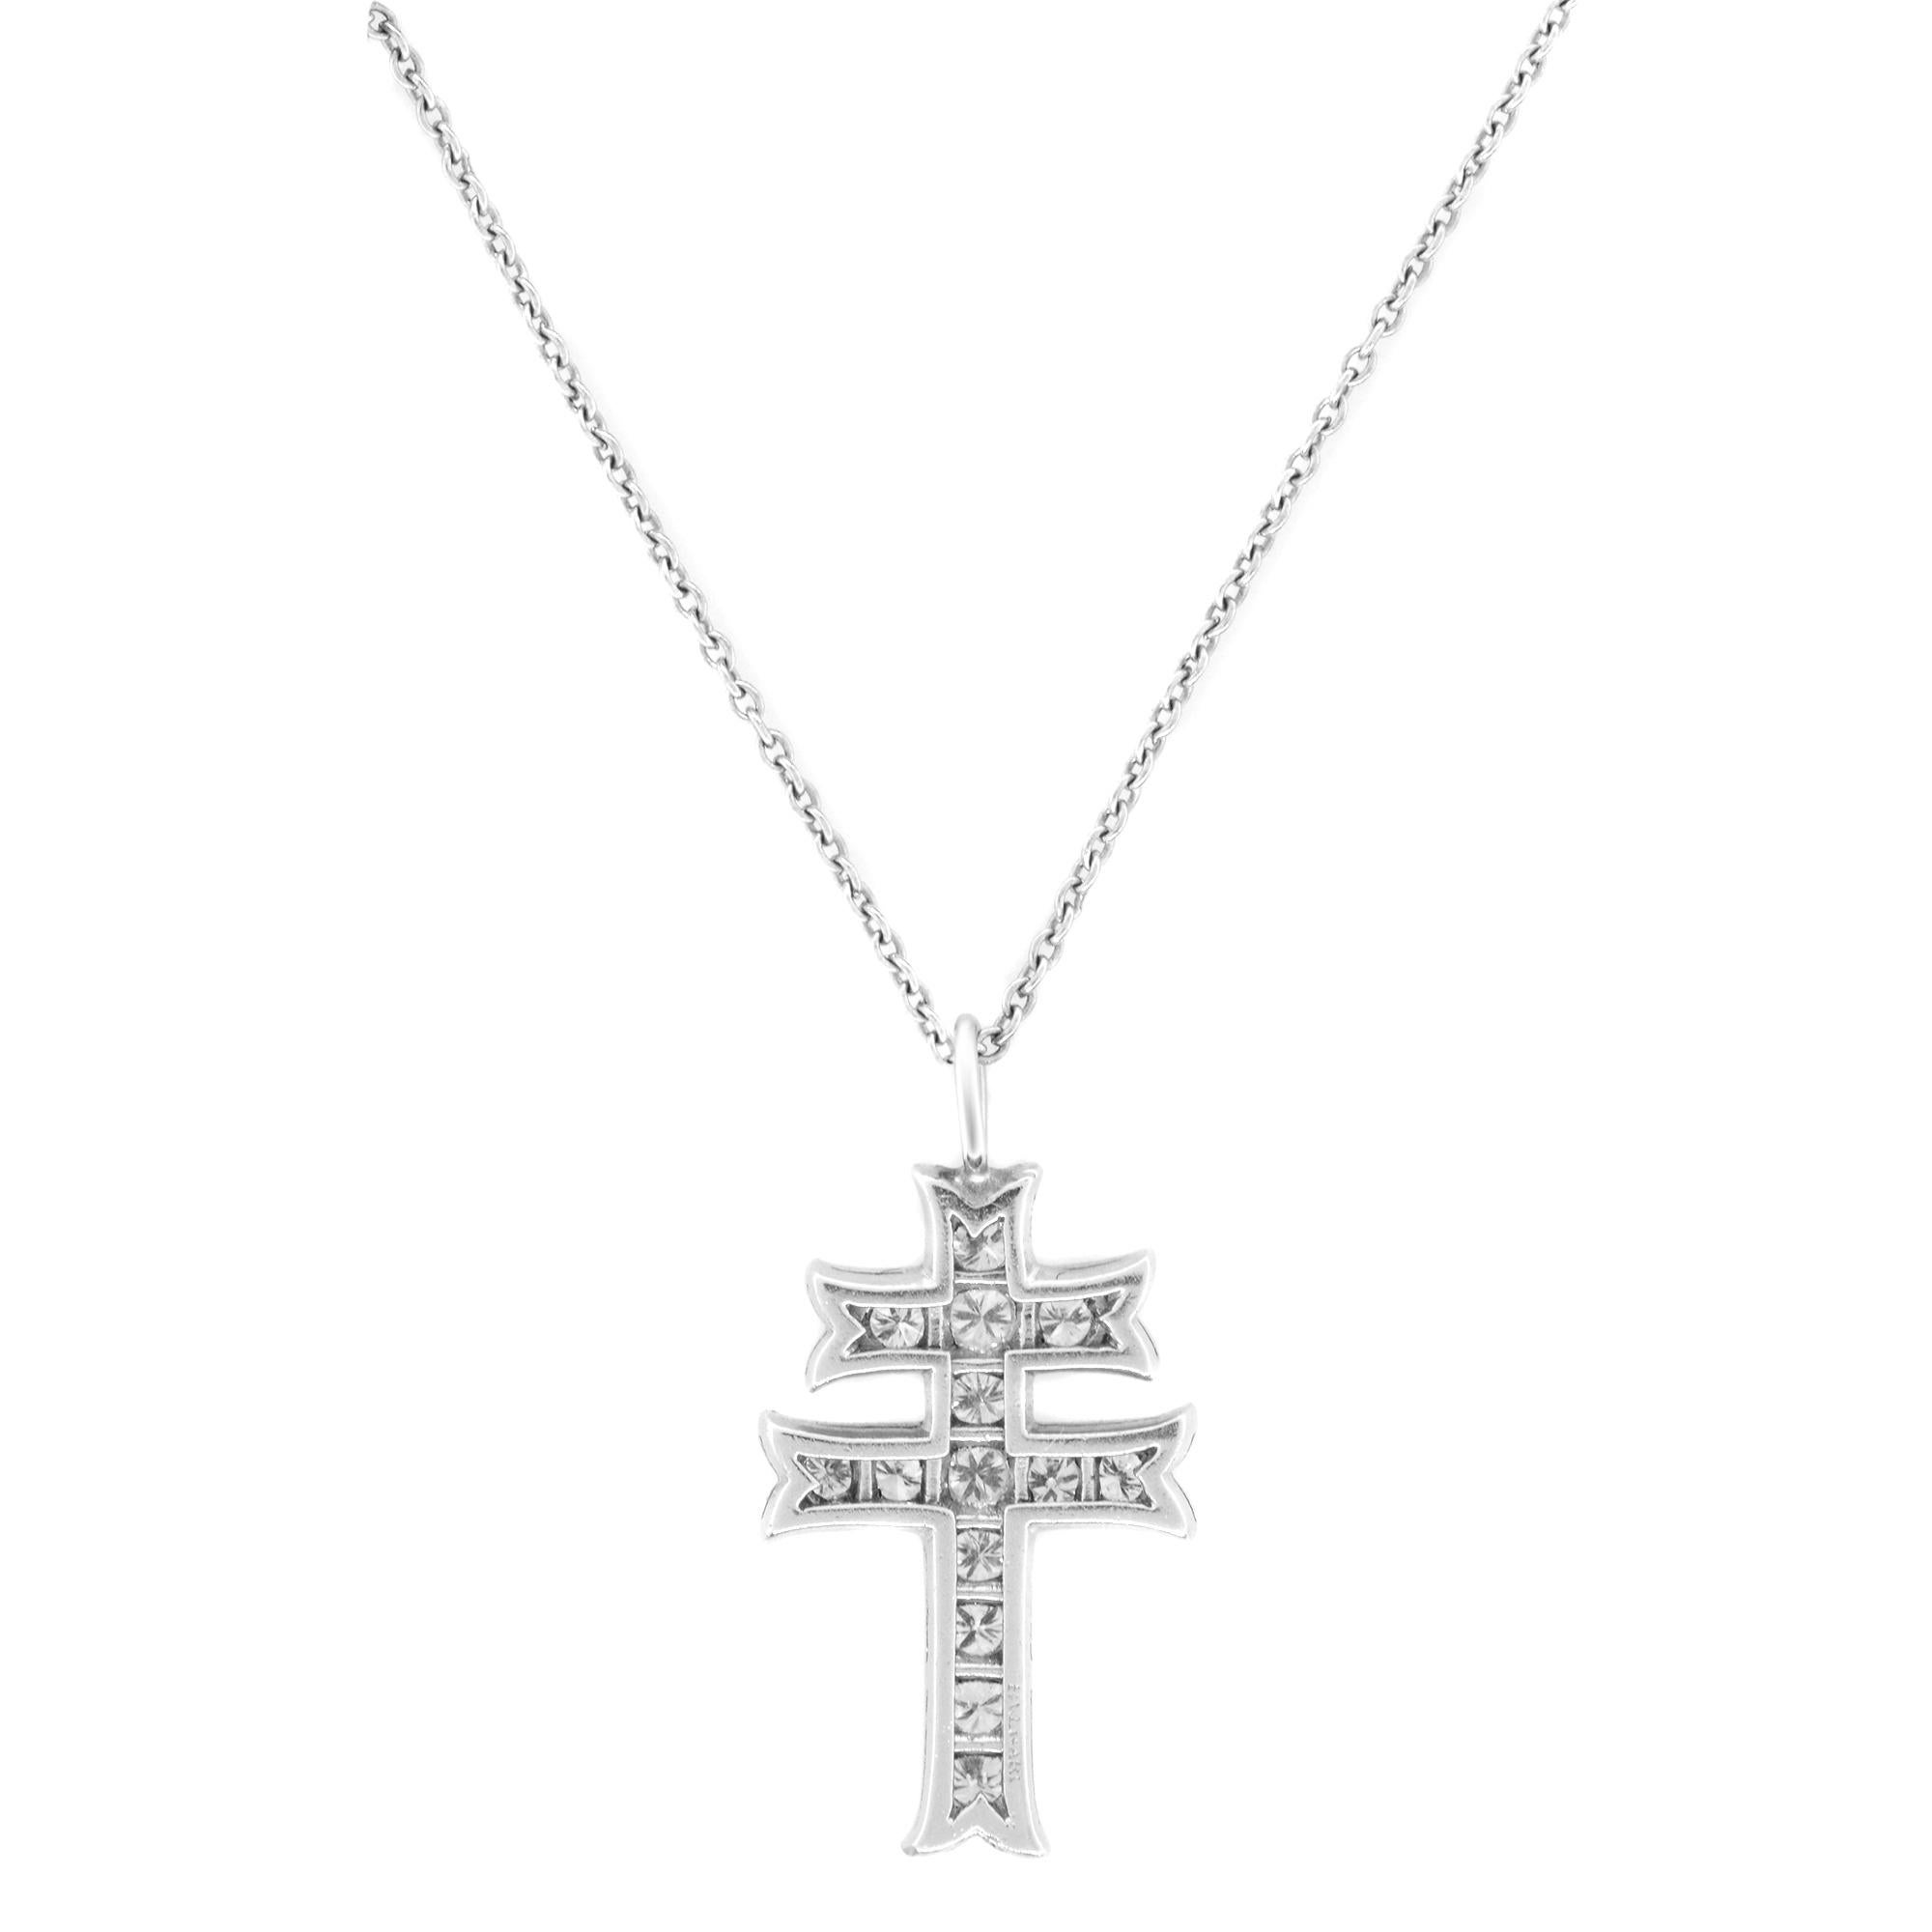 Modern Rachel Koen Diamond Cross Pendant Necklace Platinum 0.33Cttw 16 inches For Sale